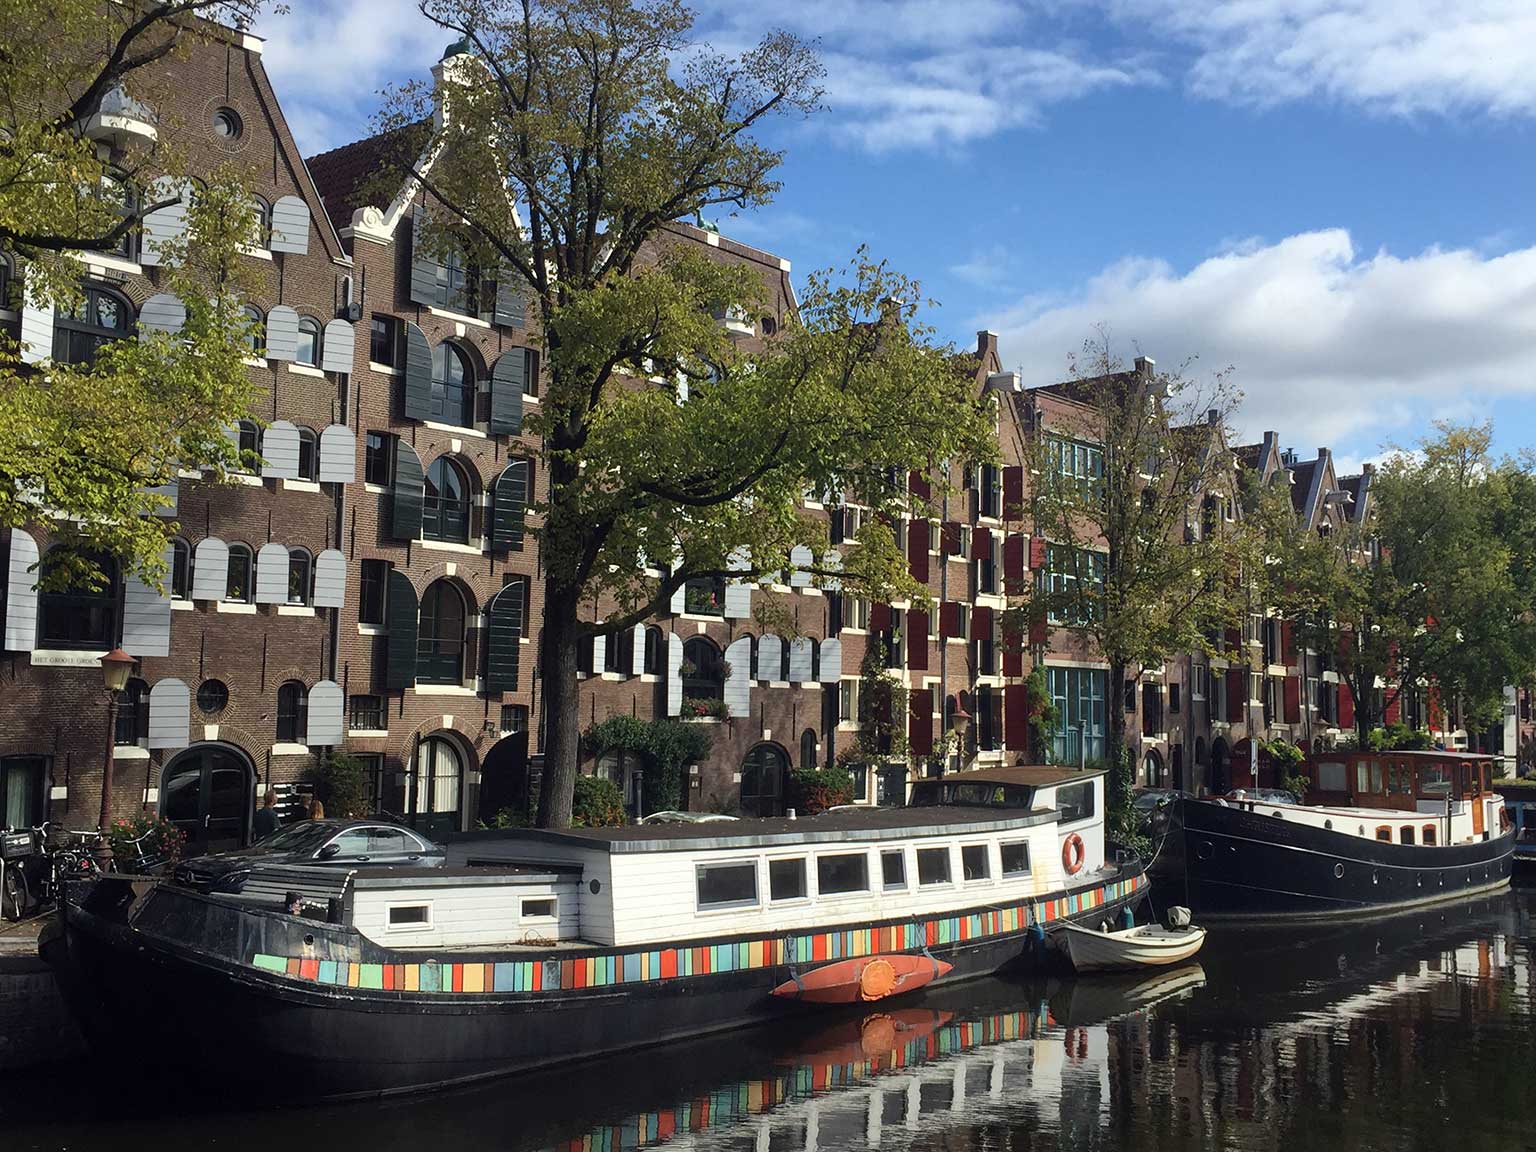 Warehouses and houseboats along Brouwersgracht, Amsterdam